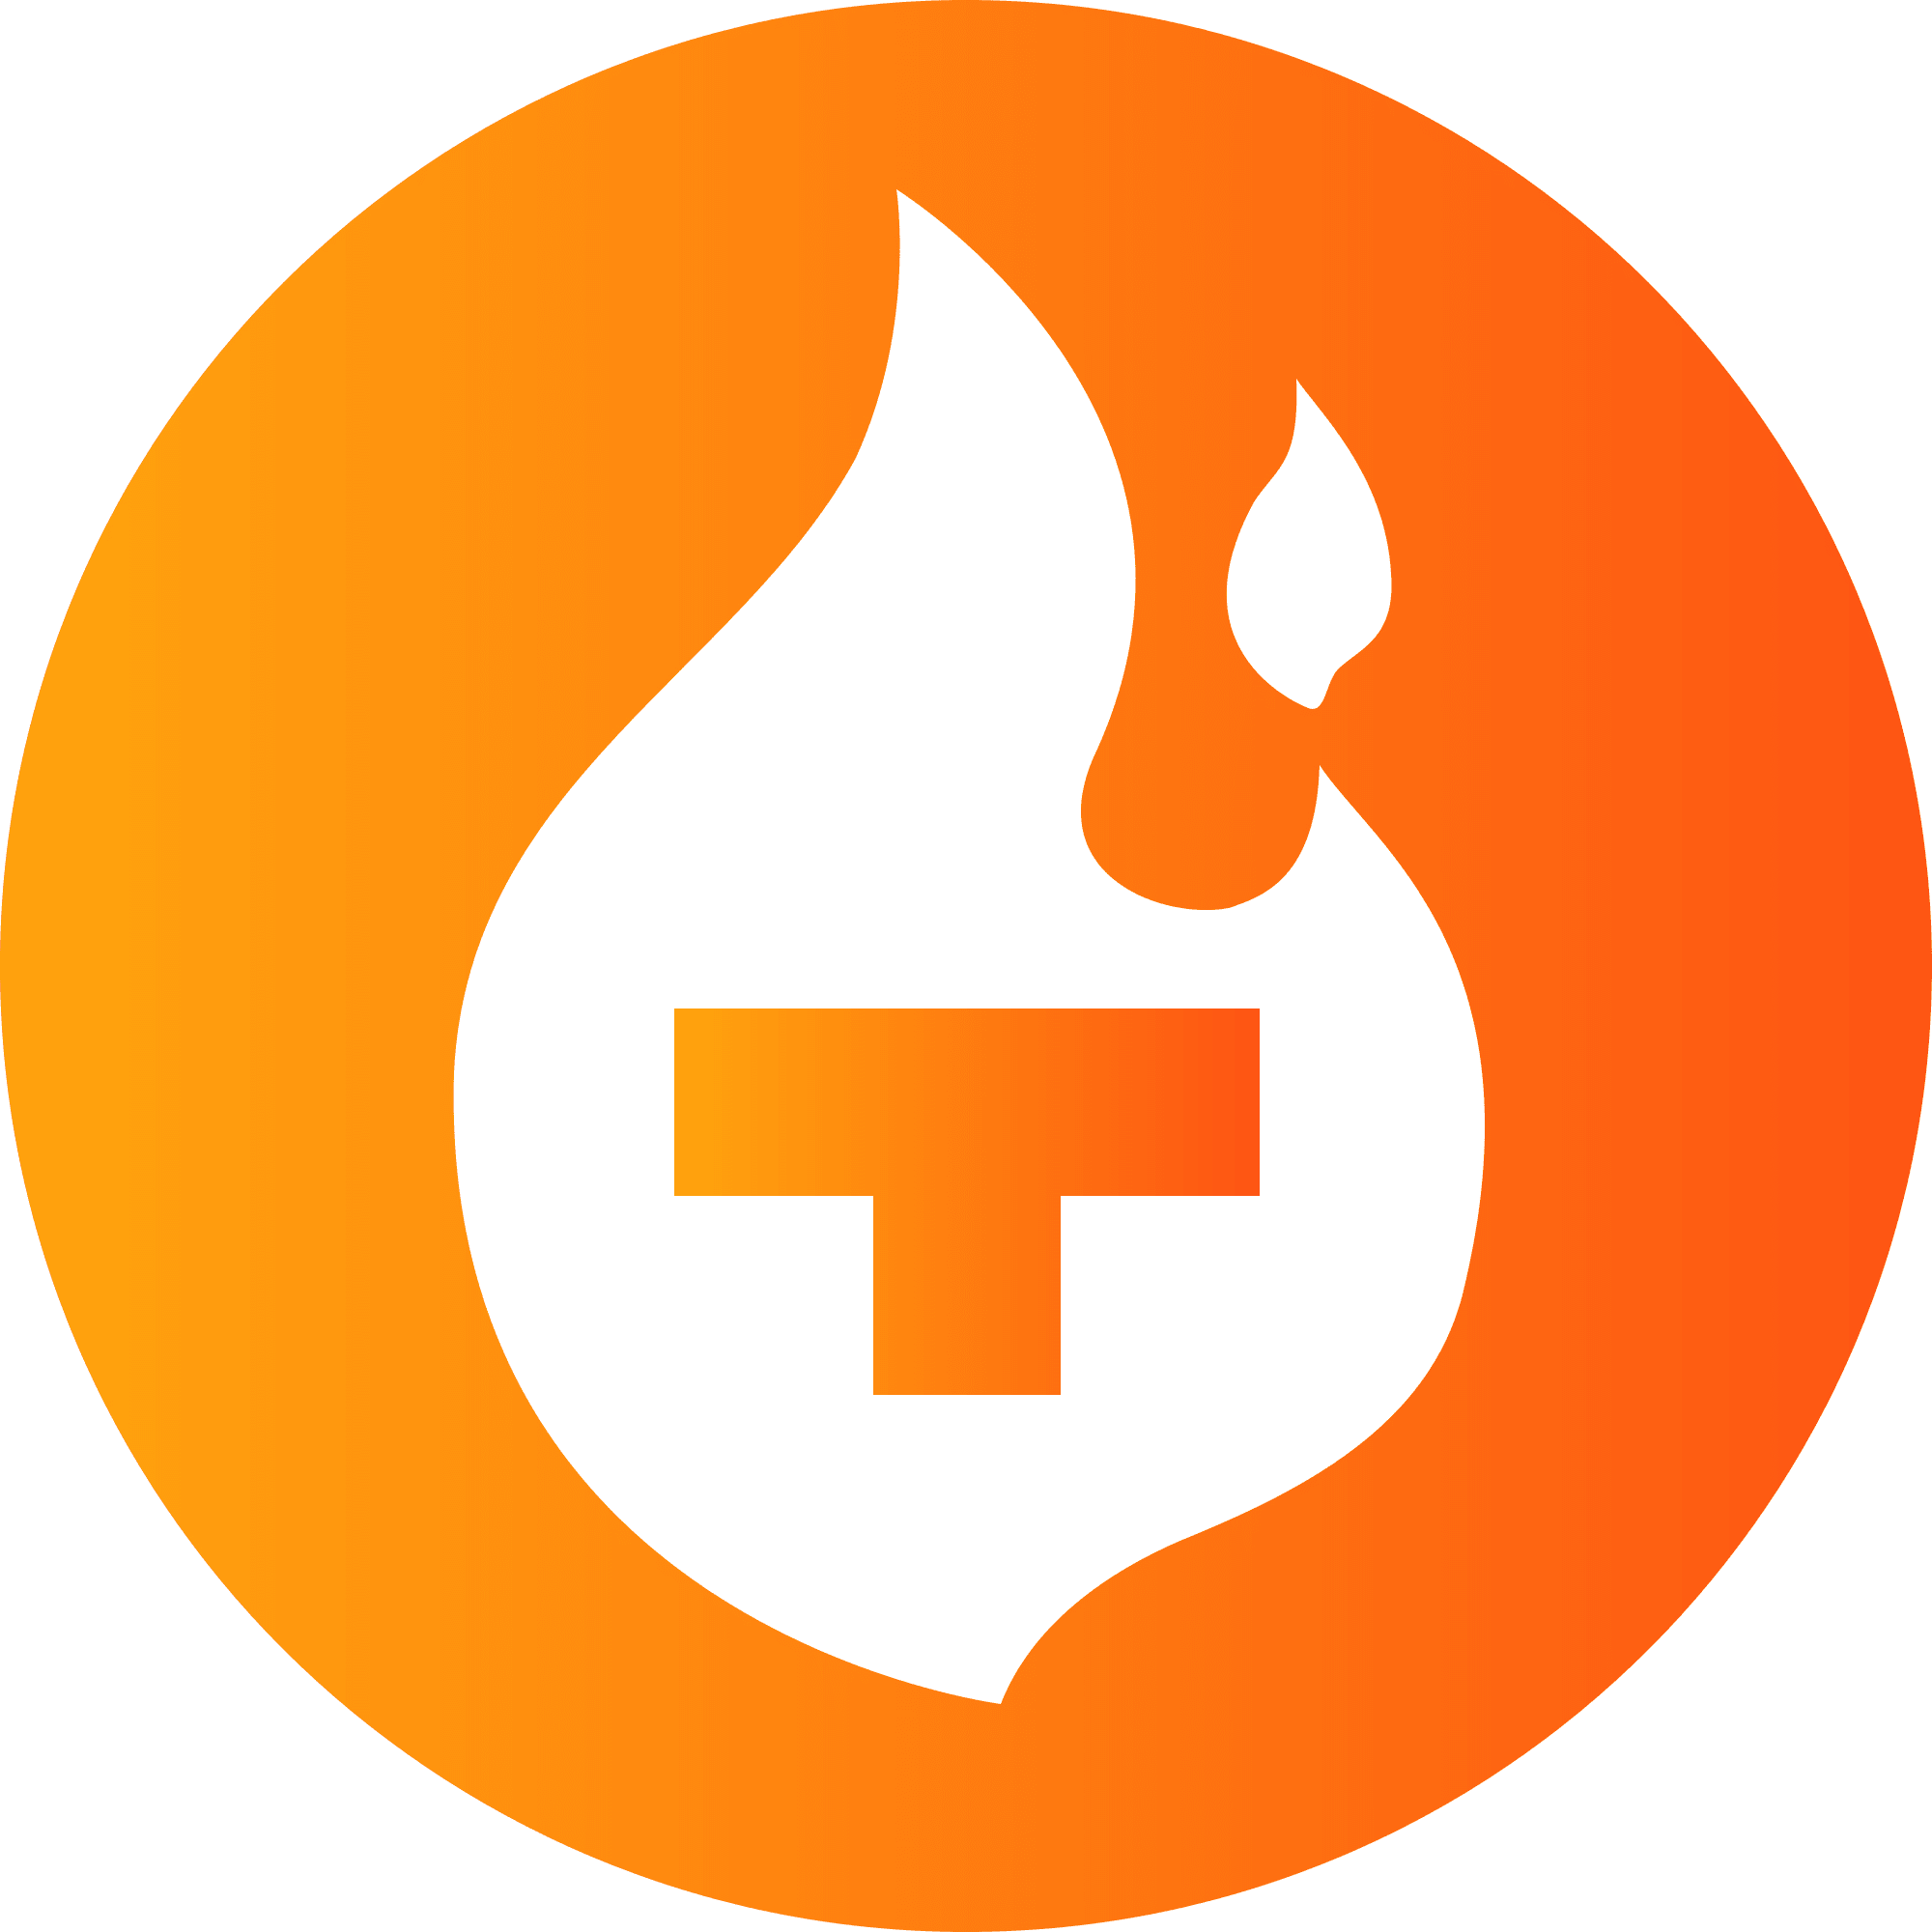 Theta Fuel logo in png format